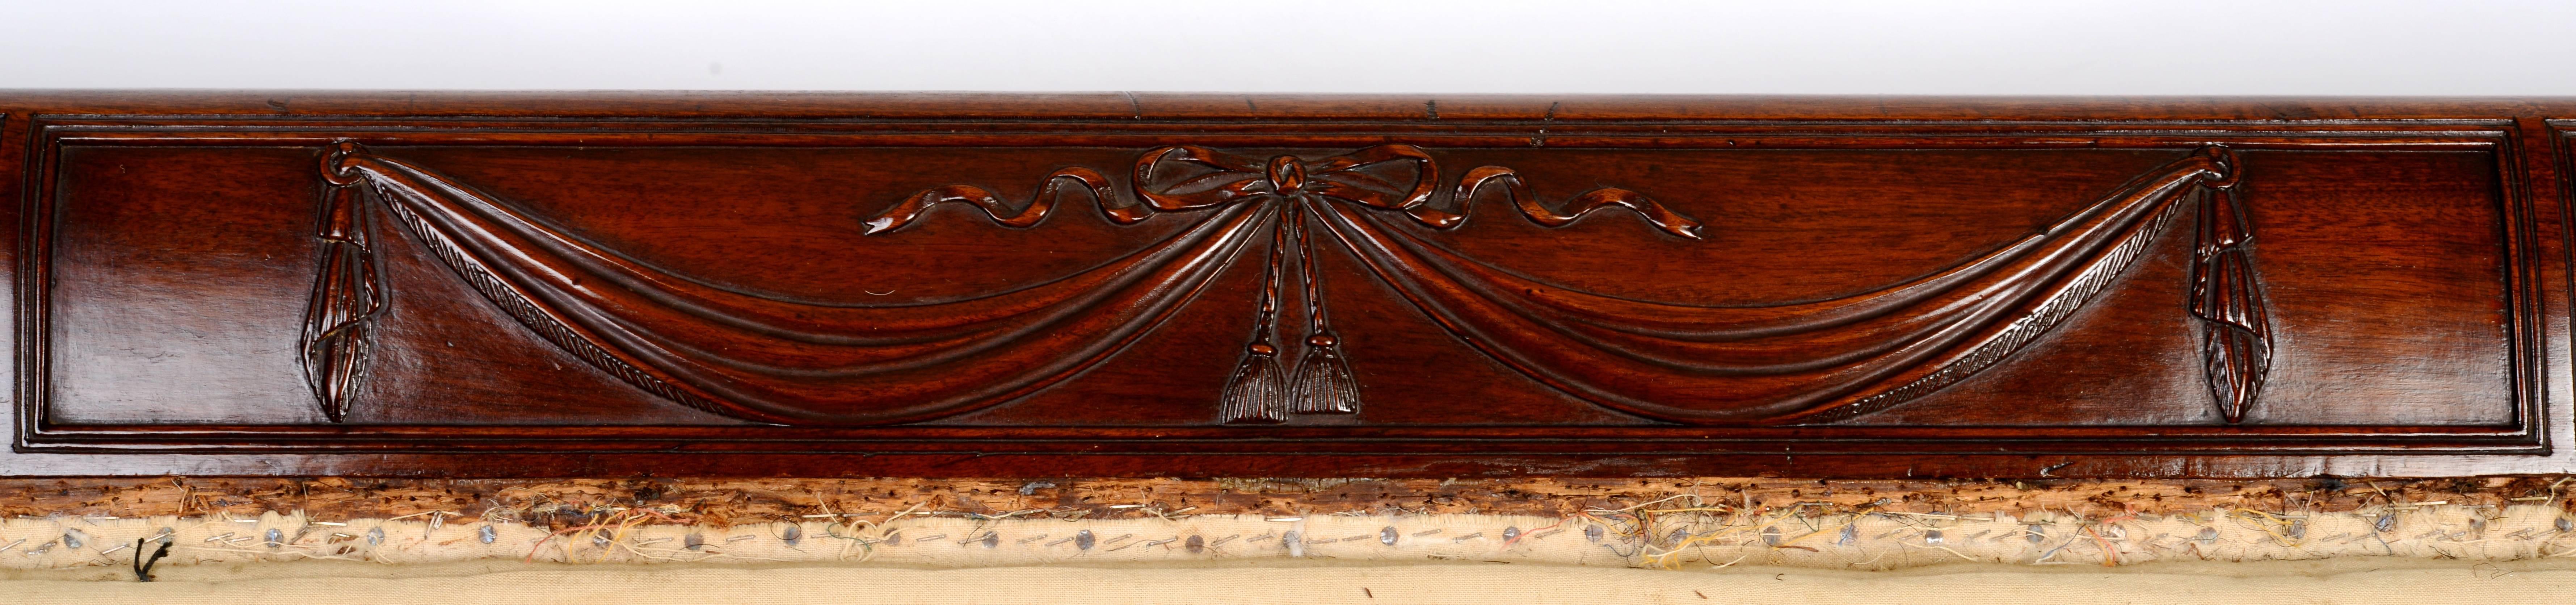 Federal Period Carved Mahogany Sofa Attributed to Duncan Phyfe NY, circa 1810 2